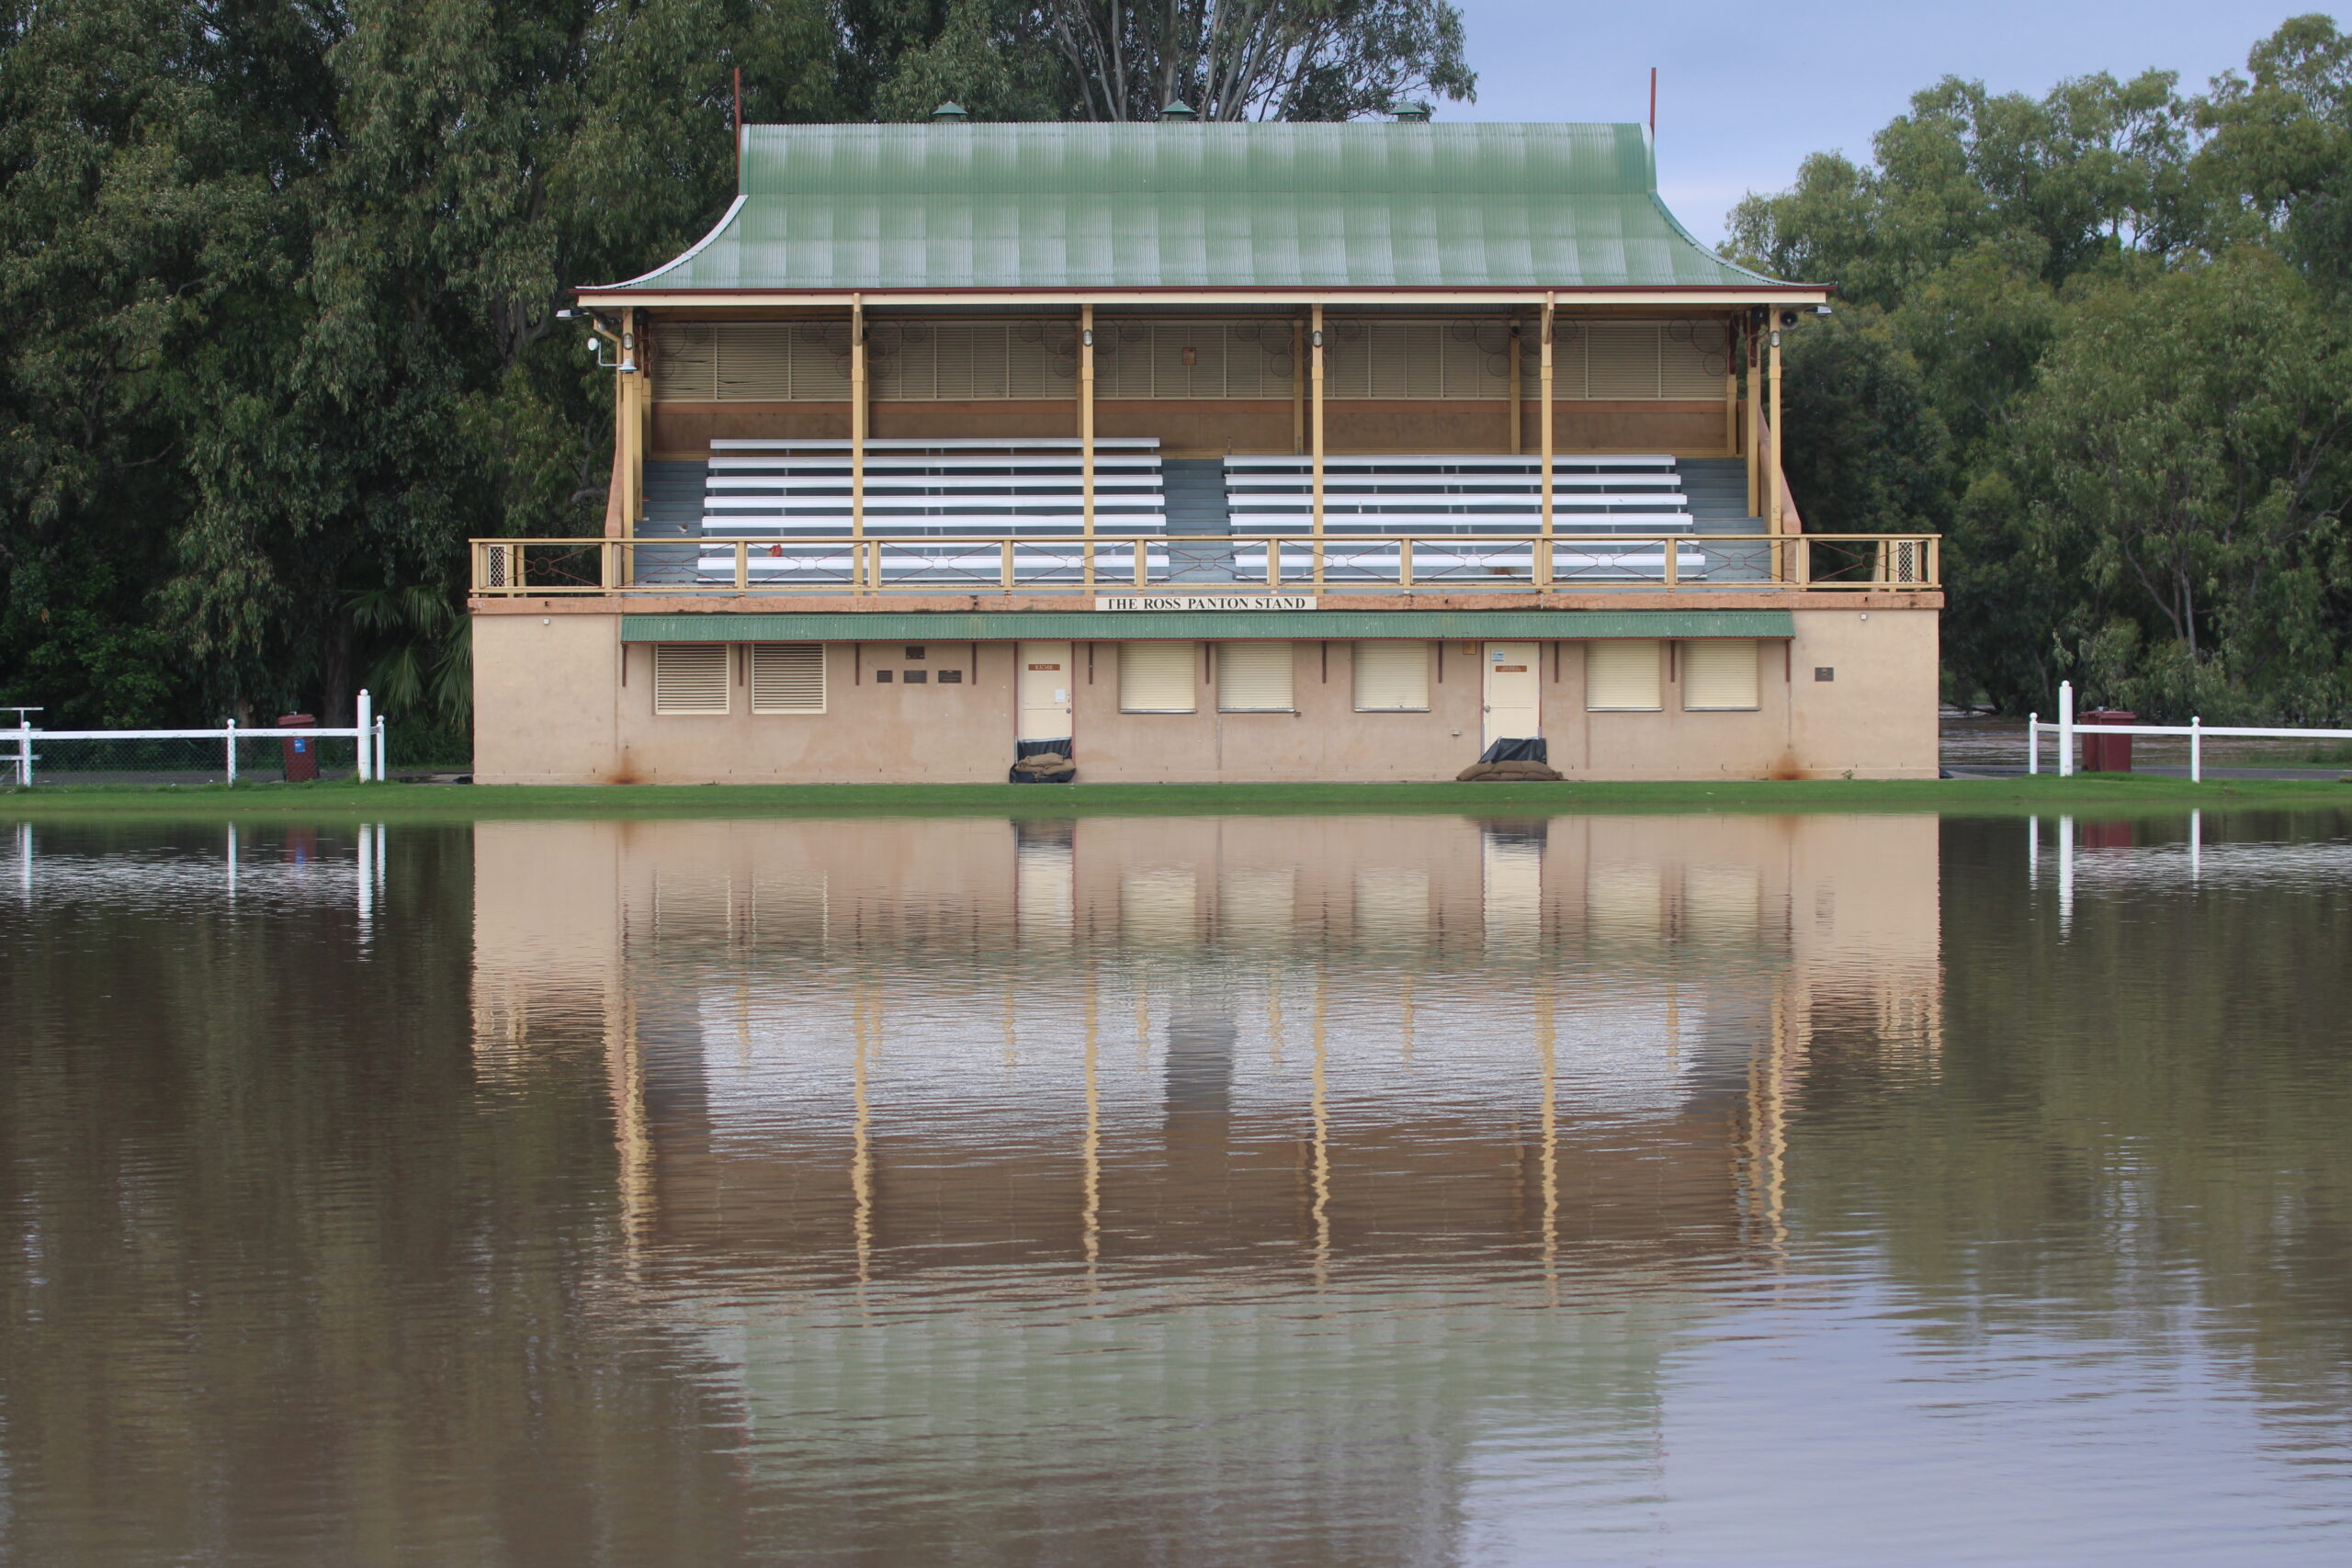 Narrabri sporting fields and facilities go underwater | PHOTOS